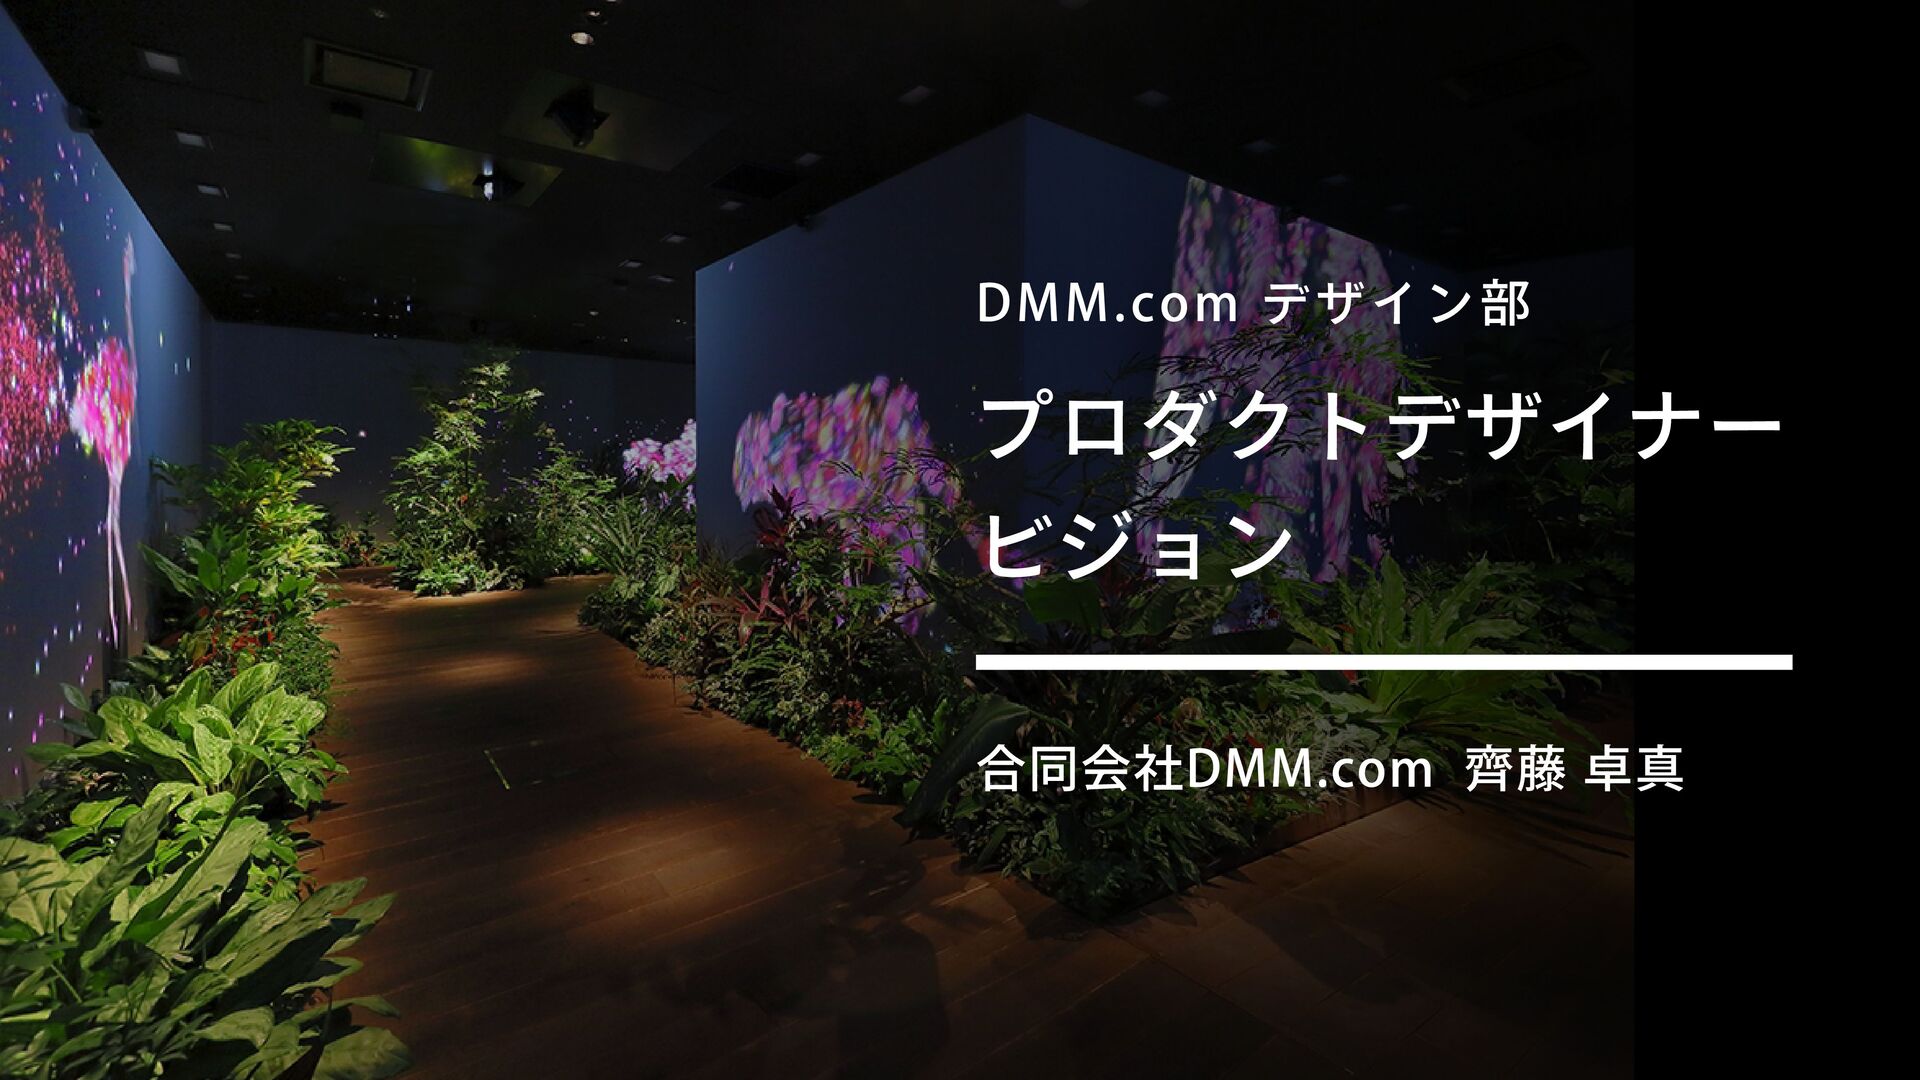 DMM.comデザイン部_プロダクトデザイナービジョン